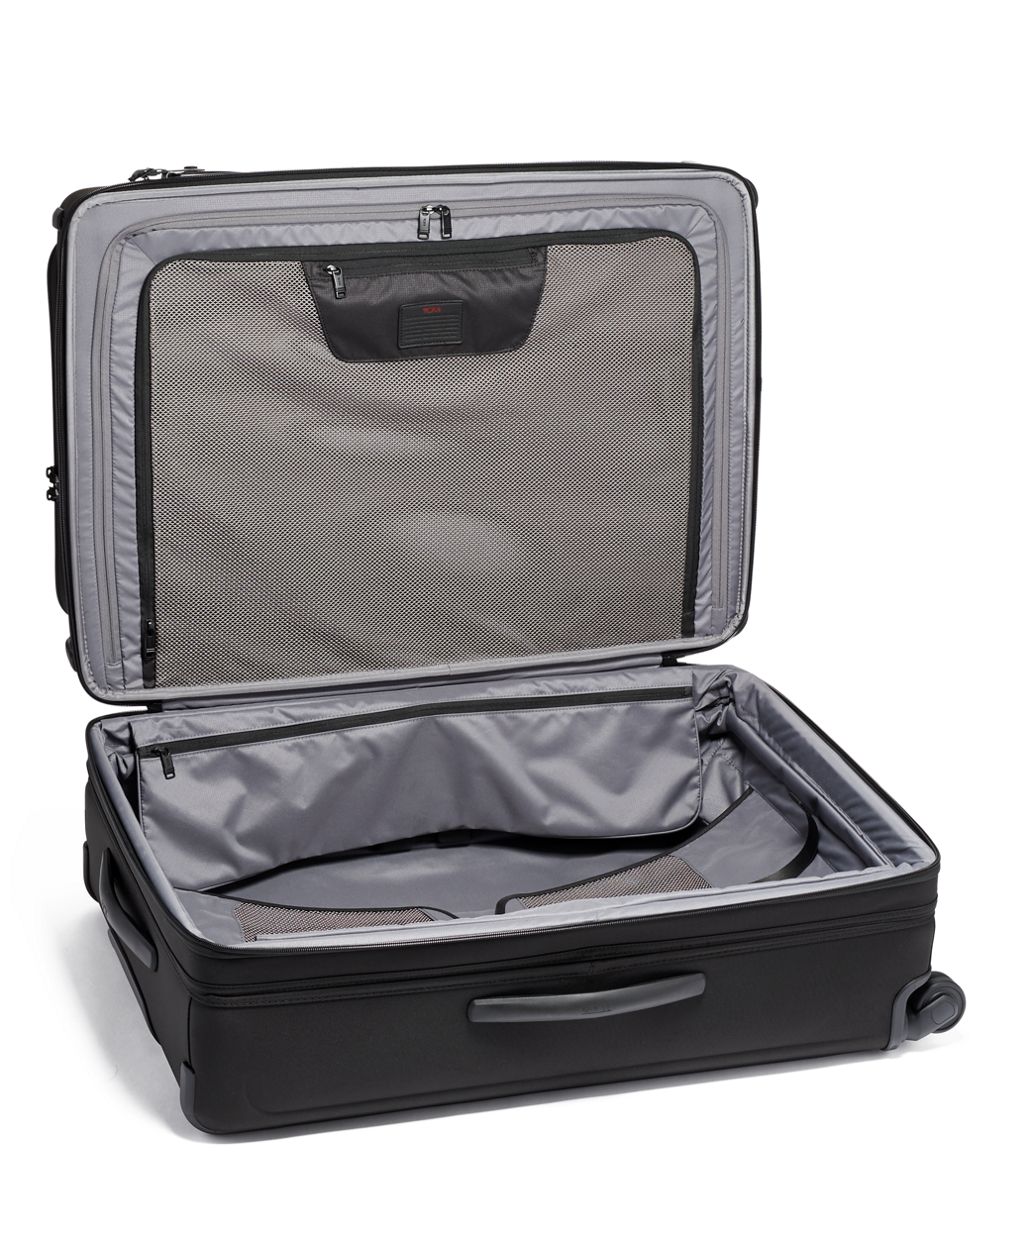 Tumi Vapor Lite Extended Trip Packing Case